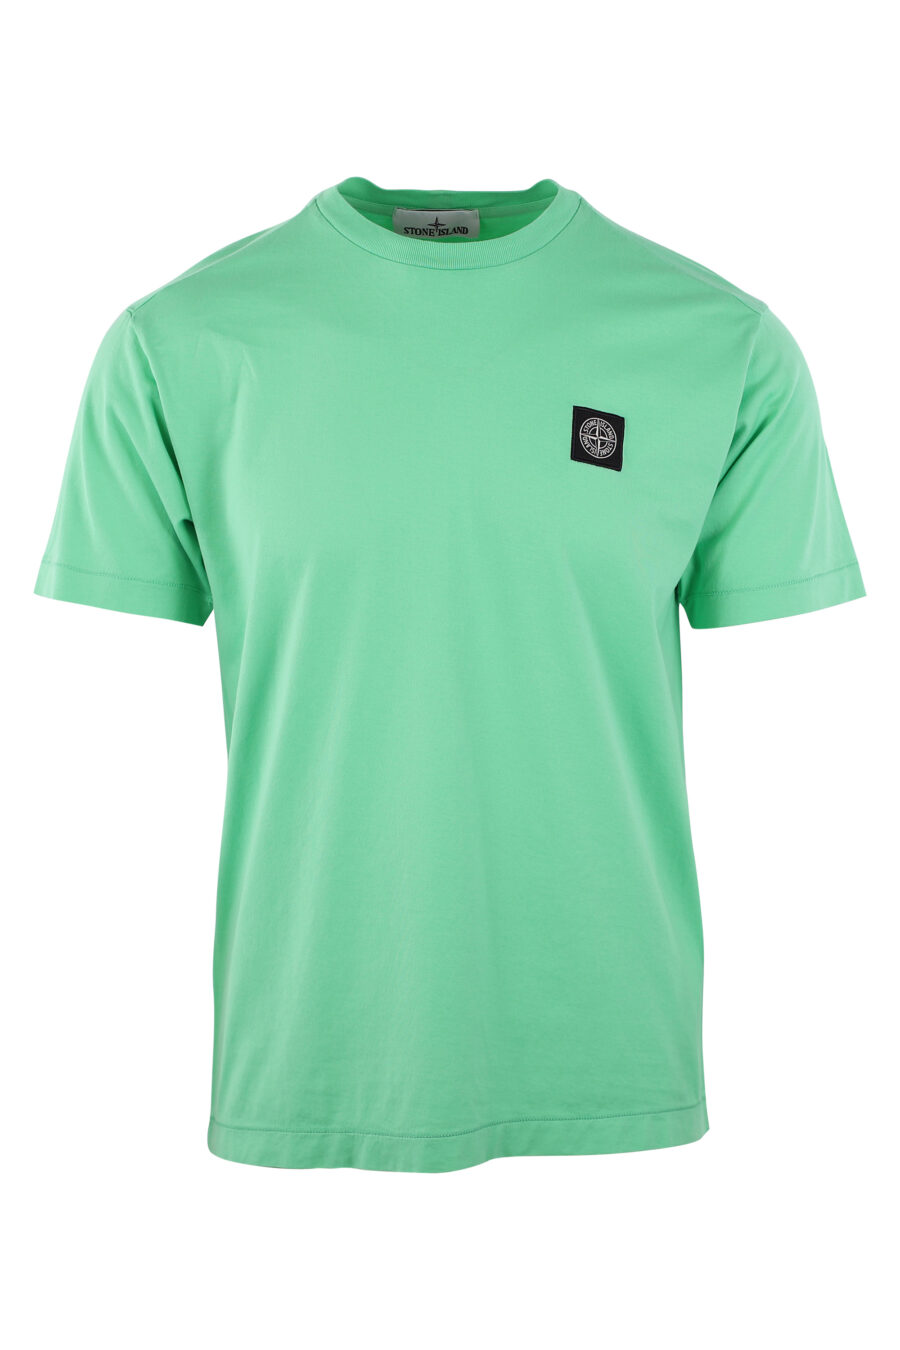 Camiseta verde claro con logo parche - IMG 3139